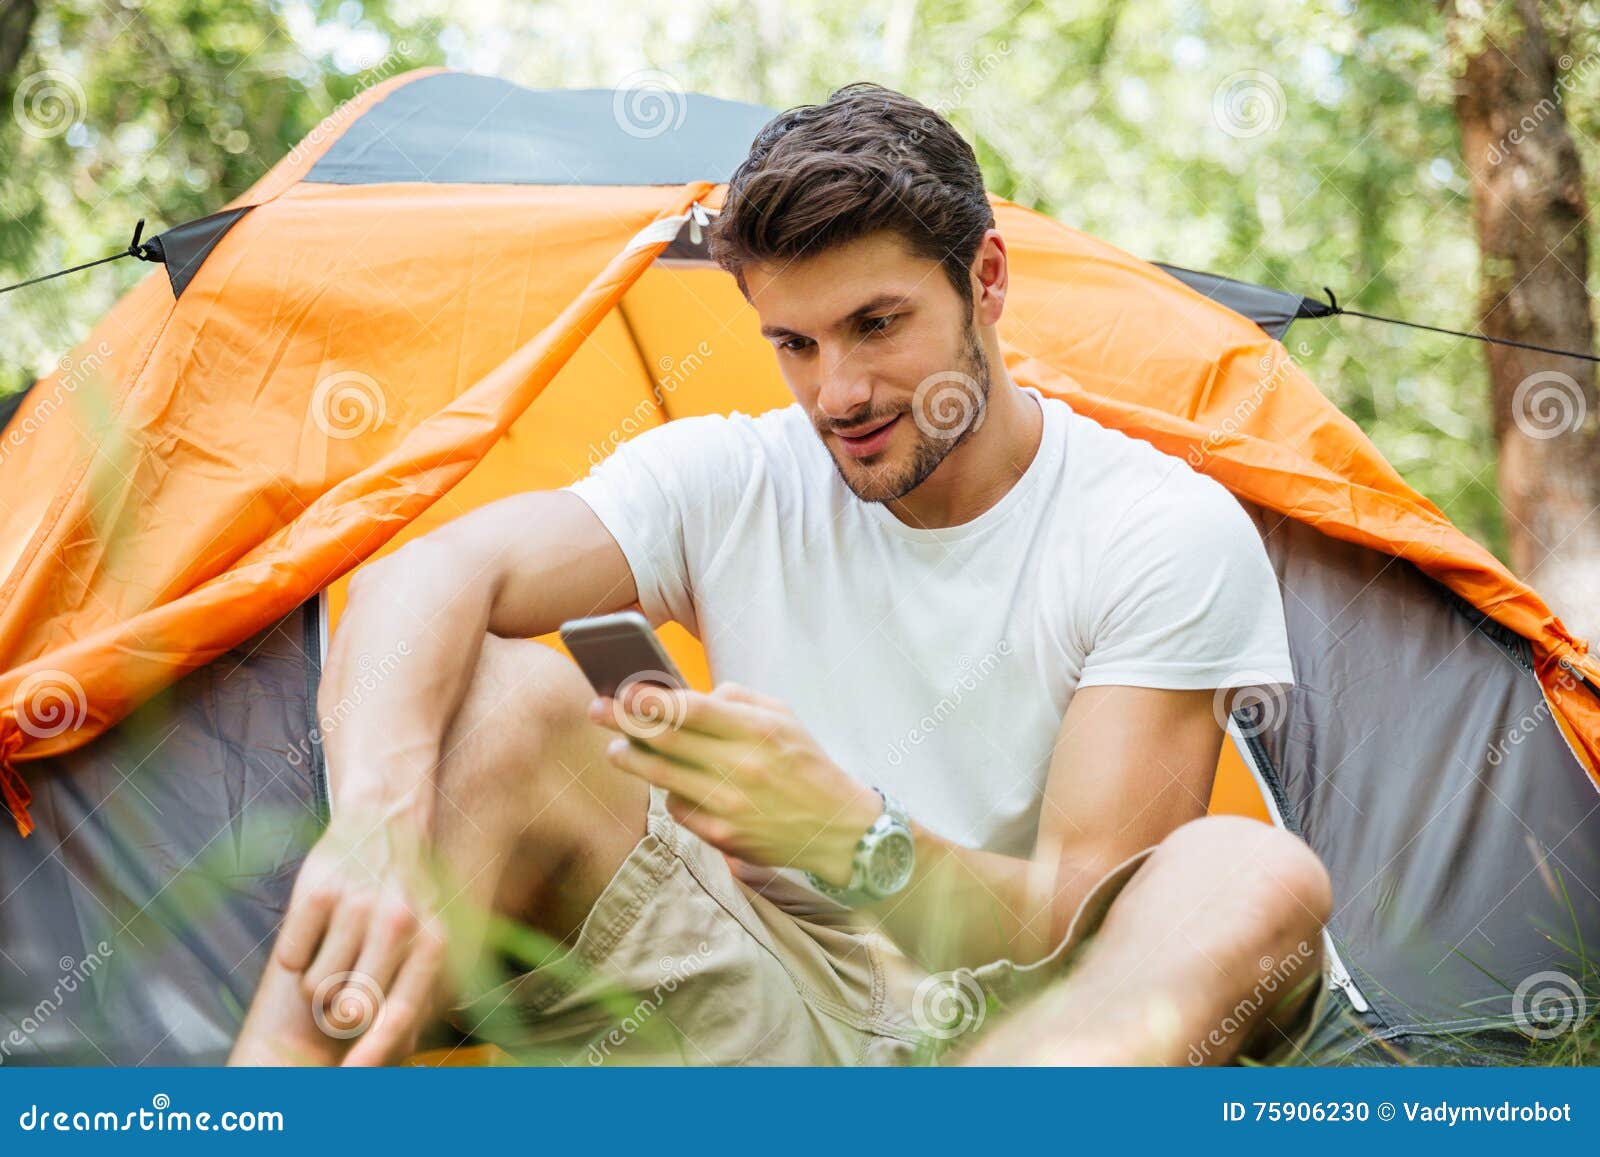 Camping men